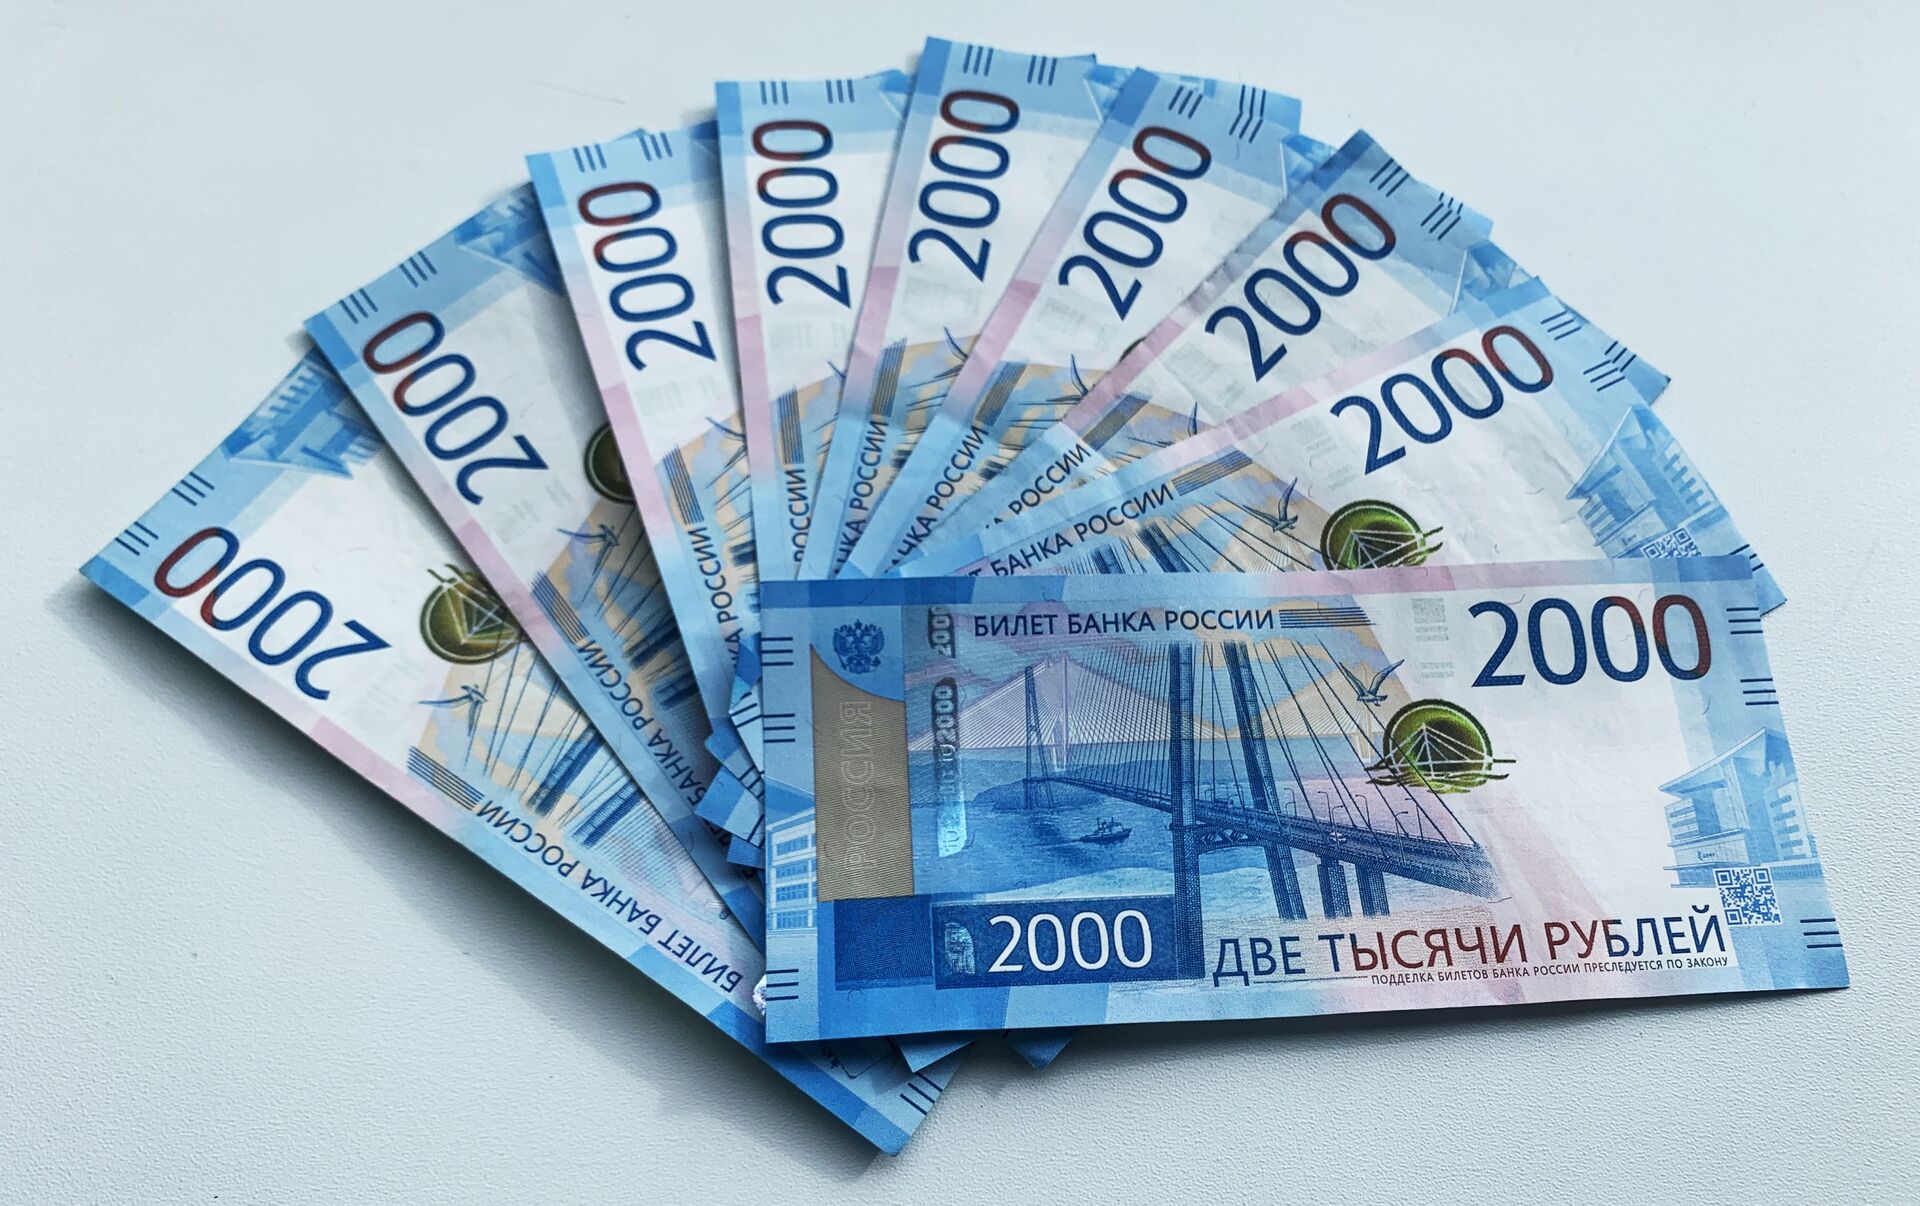 2 1000 20 году. 2000 Евро деньги. 2000 Евро в рублях. Рубли. 2000 Евро банкнота.